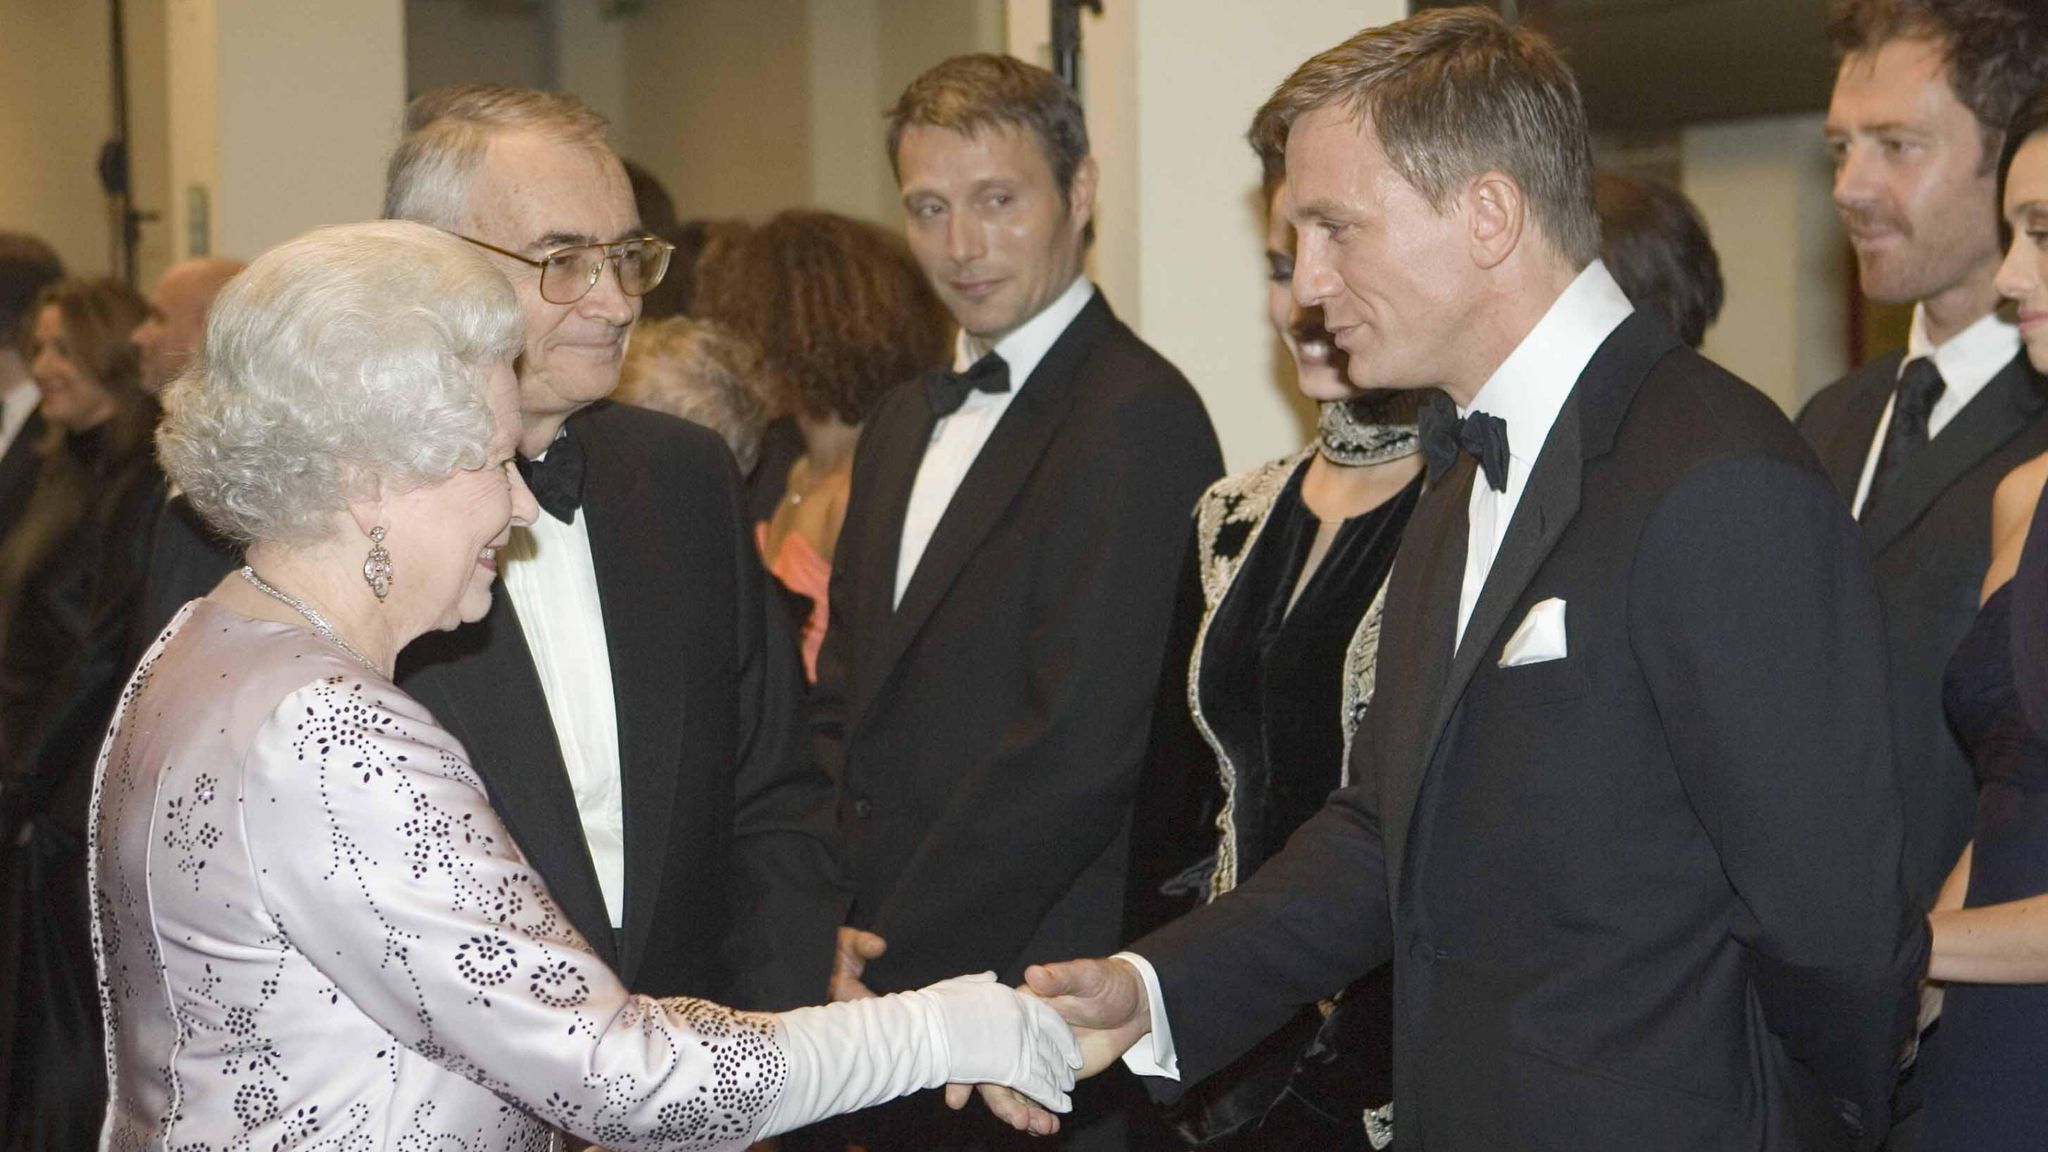 Daniel Craig (007) receiving a KBE in the New Year's Honours list.